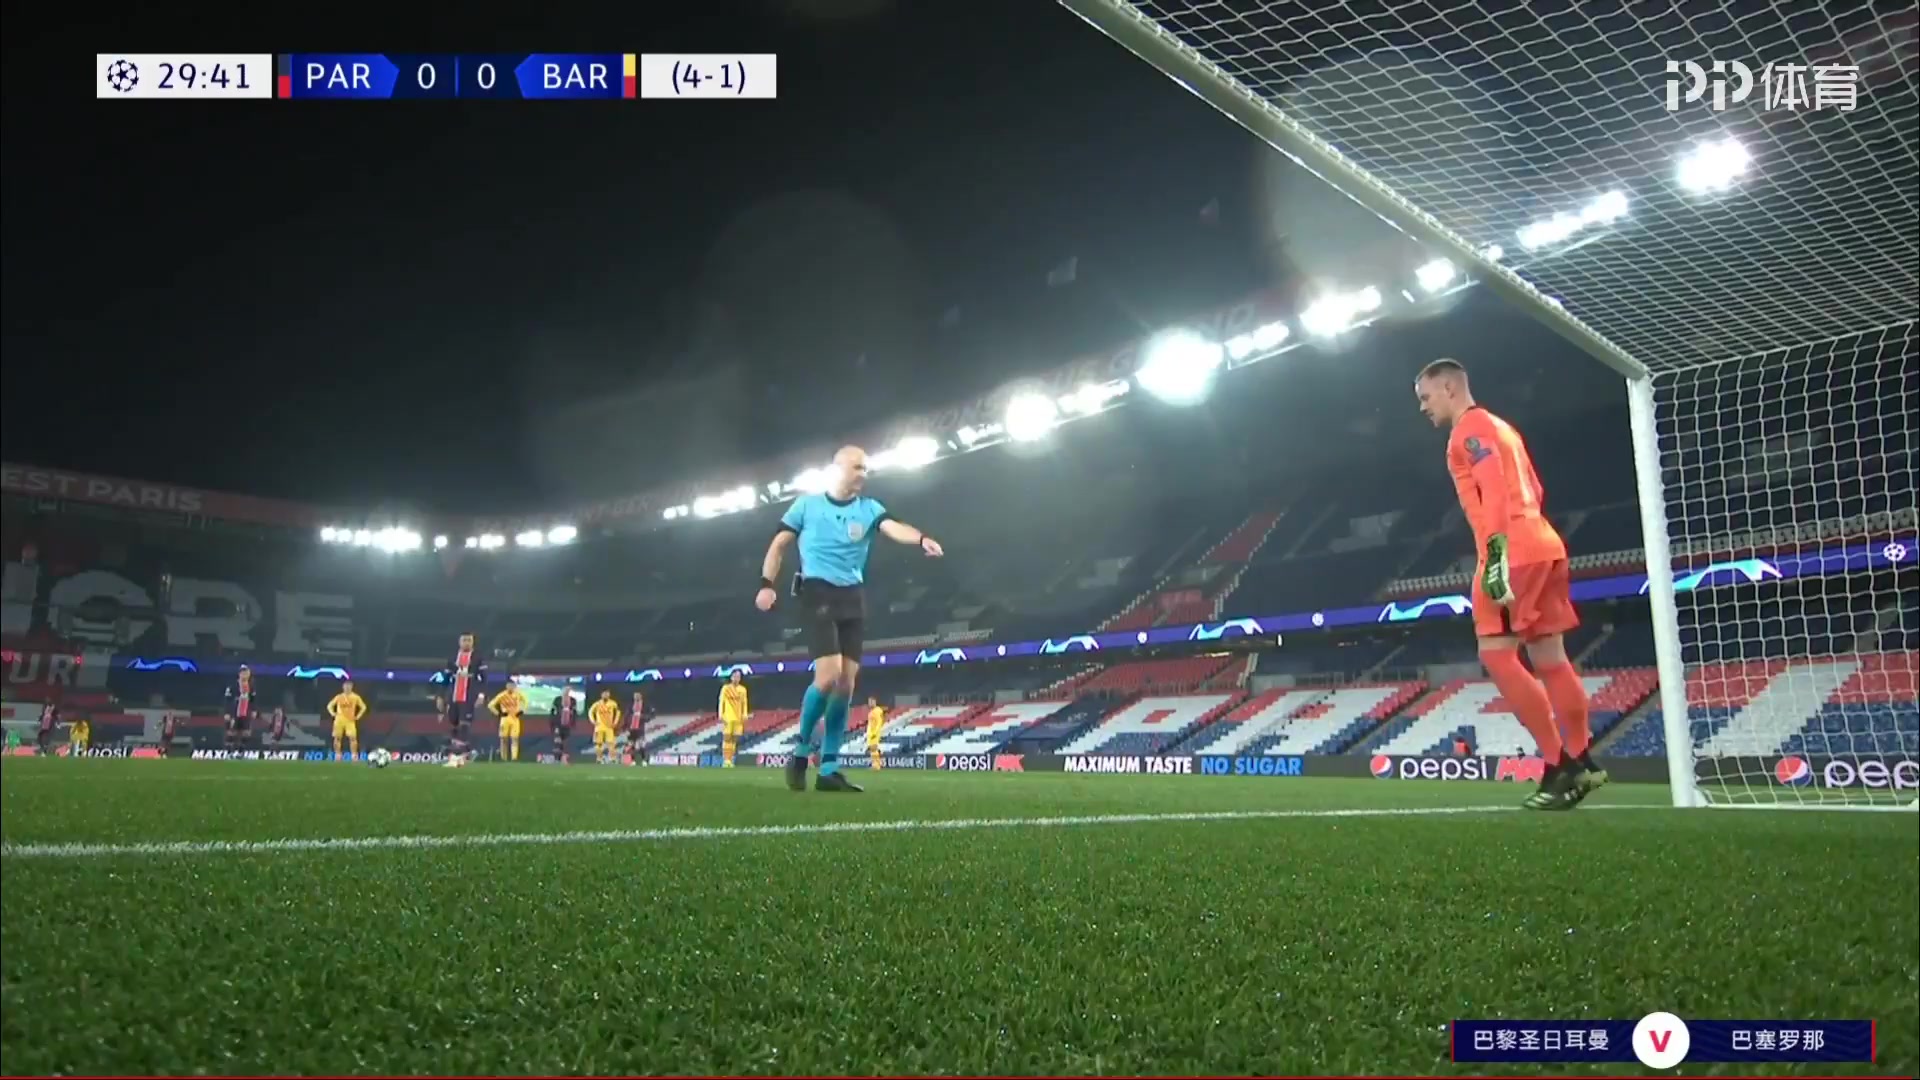 UEFA CL Paris Saint Germain (PSG) Vs FC Barcelona Kylian Mbappe Lottin Goal in 29 min, Score 1:0